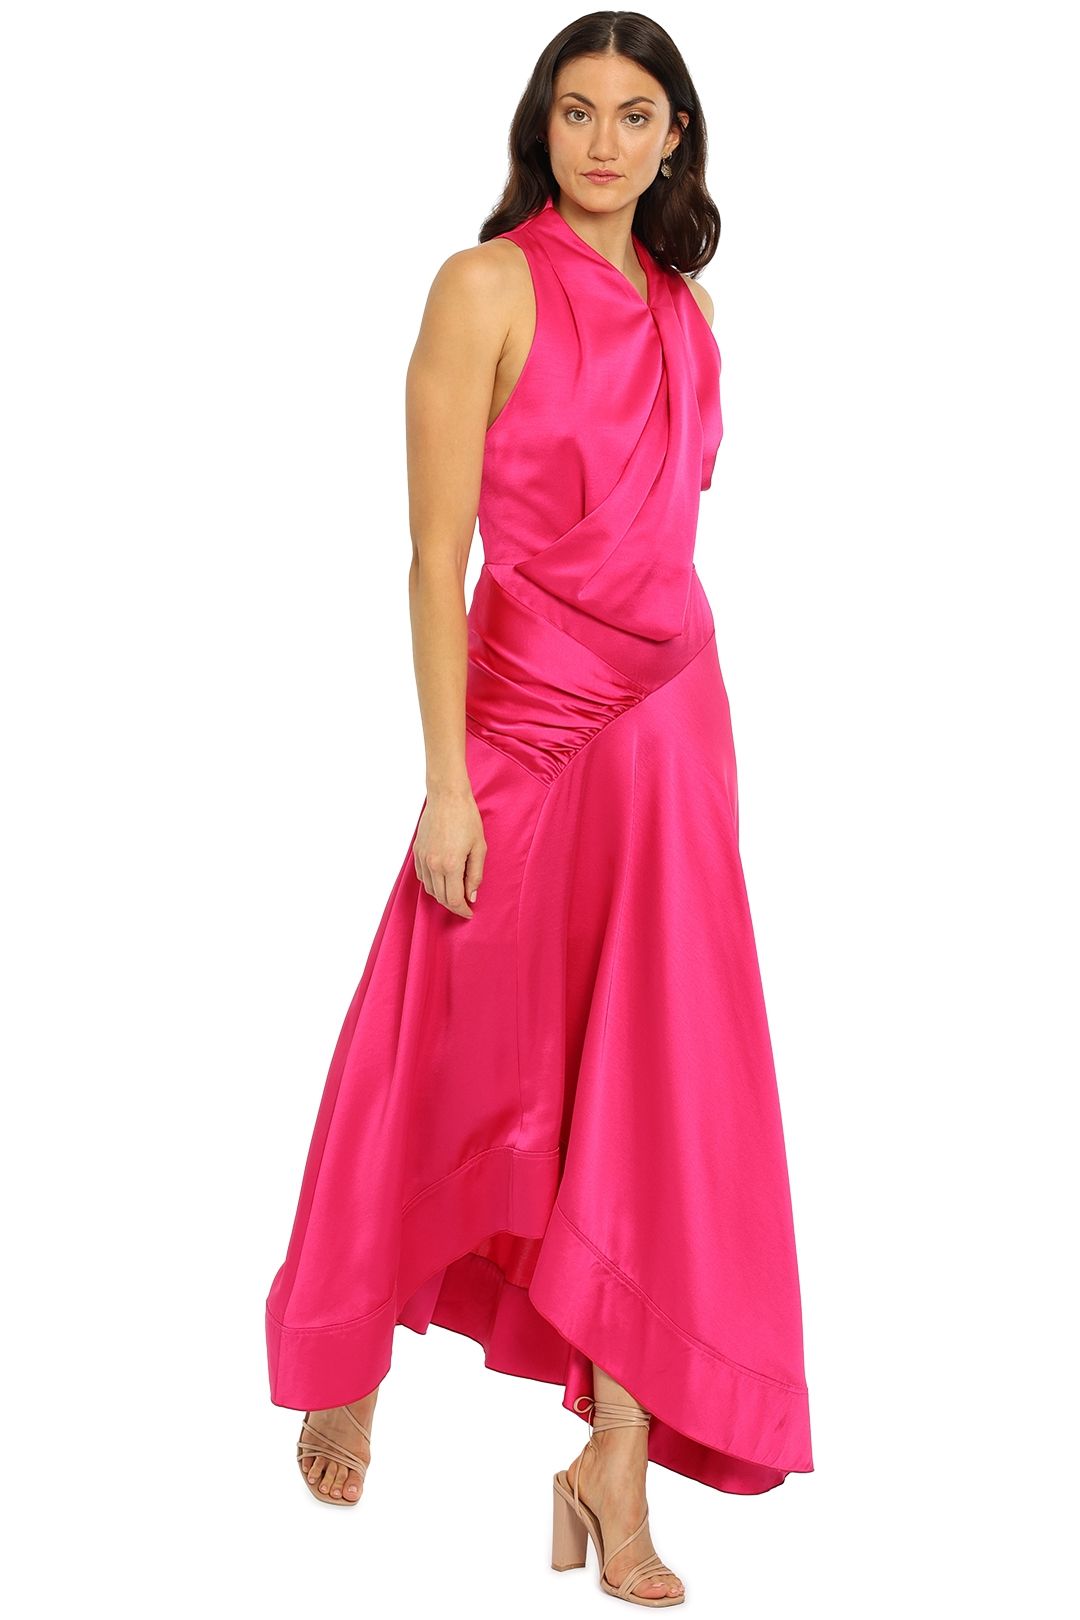 Acler Palmera Dress Pink Satin